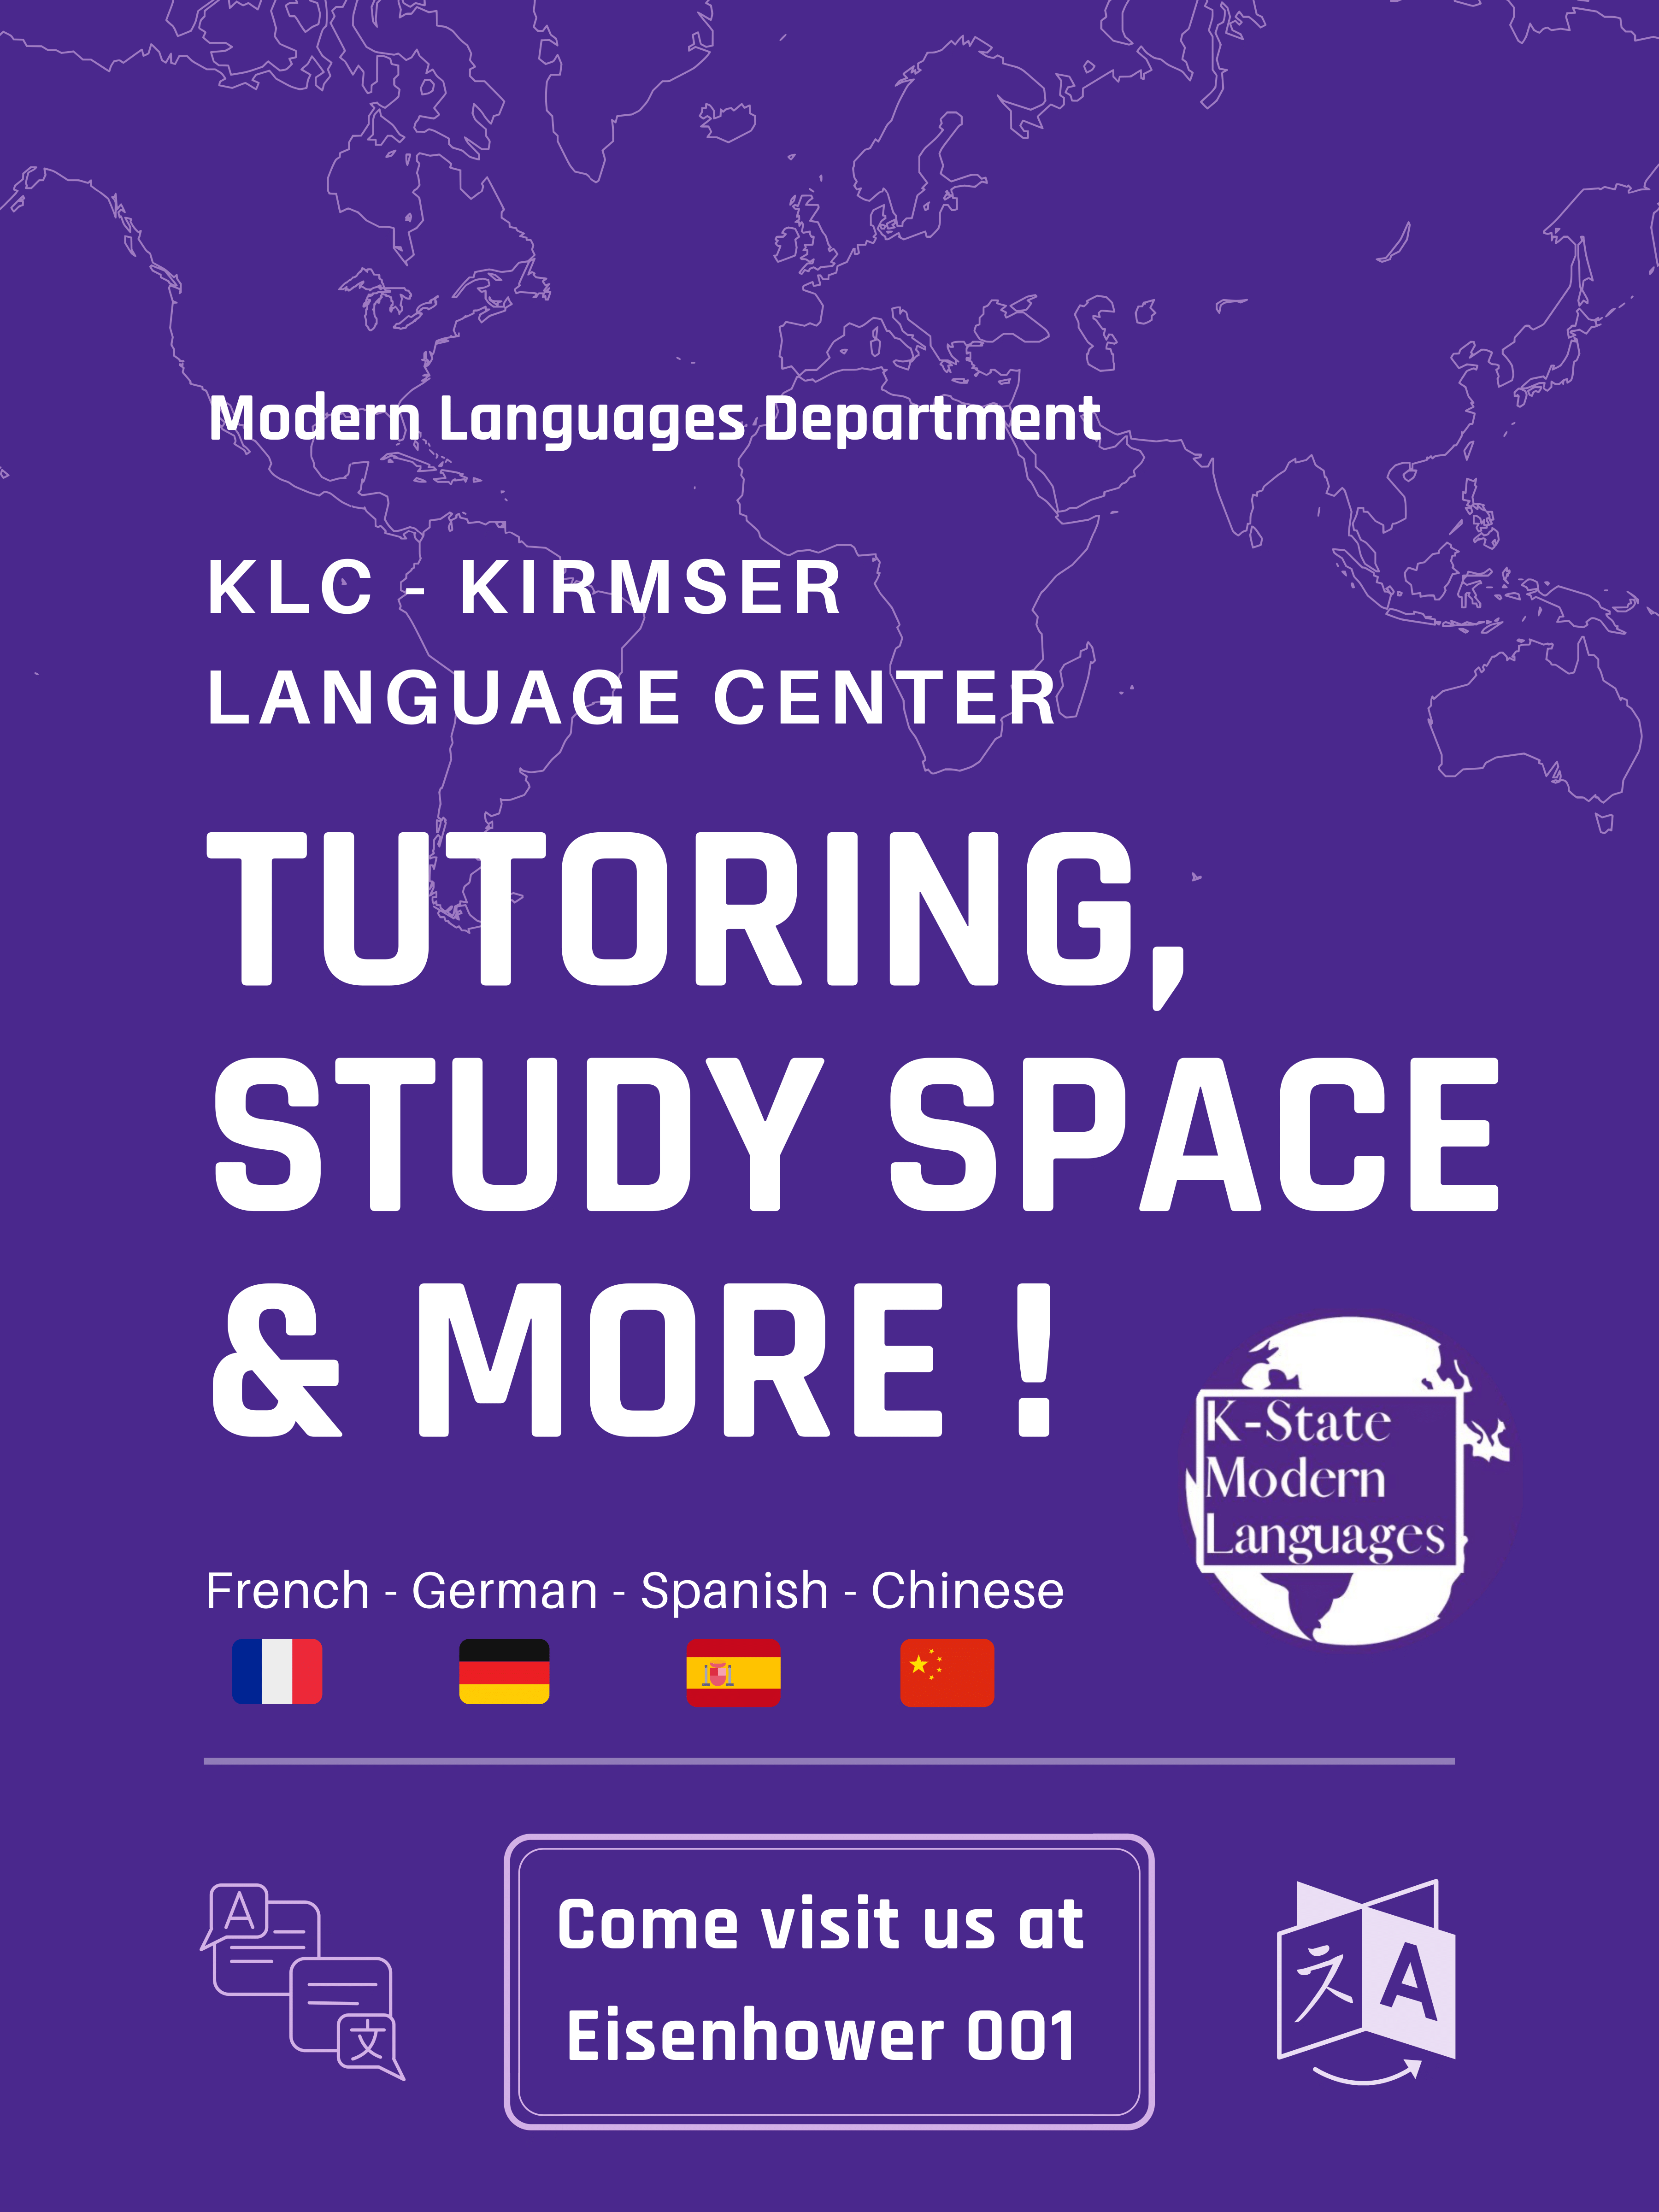 Modern Languages Department. KLC - KIRMSER LANGUAGE CENTER. TUTORING, STUDY SPACE & MORE !Come visit us at Eisenhower 001. French - German - Spanish - Chinese